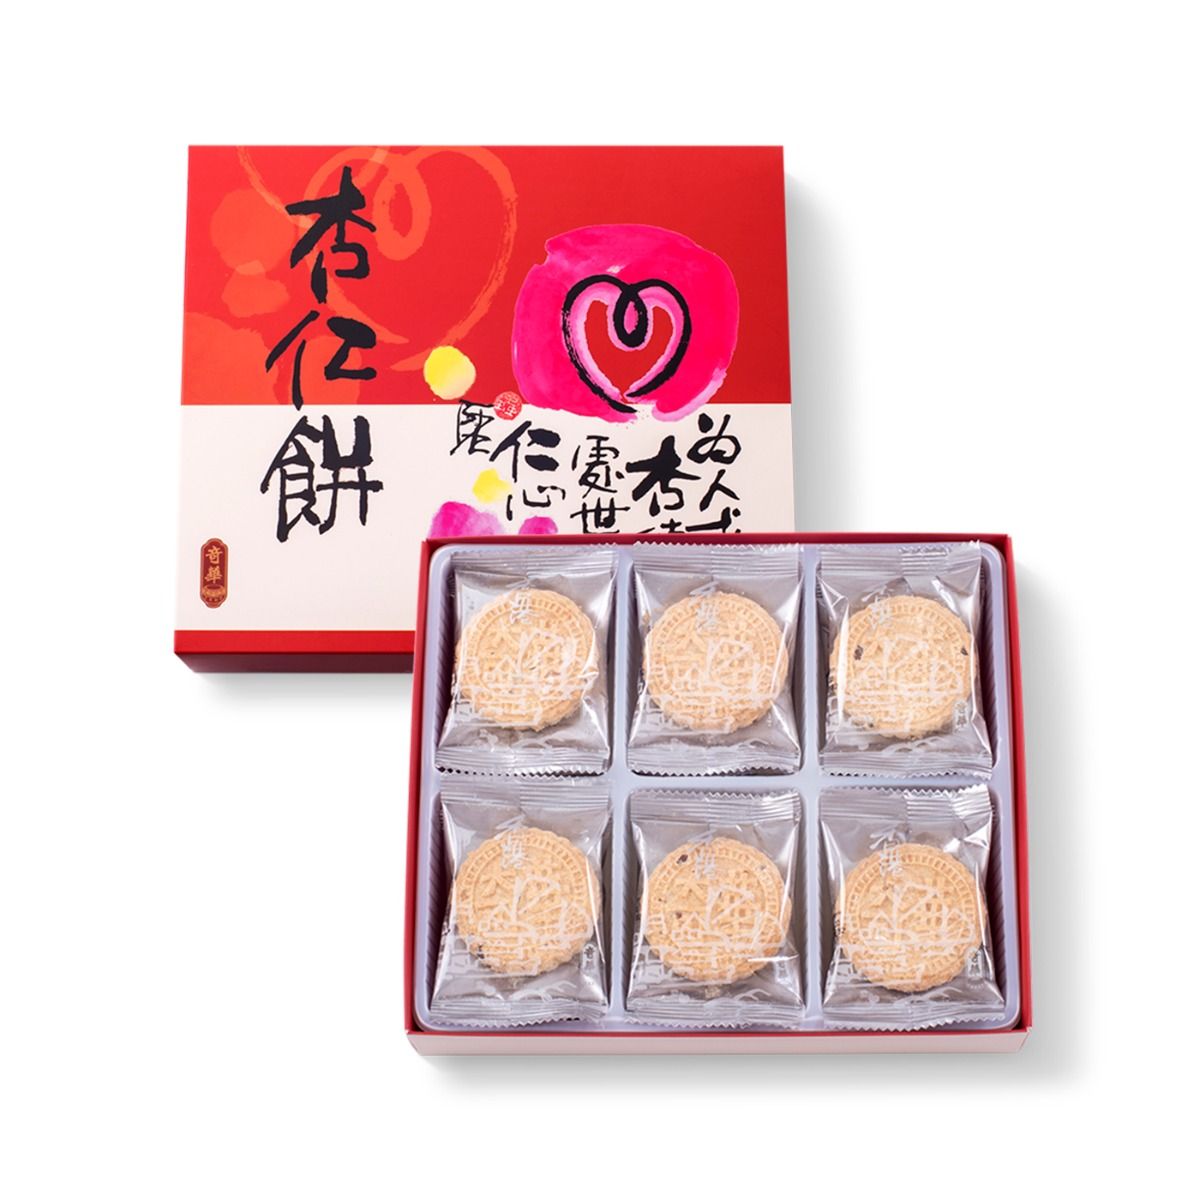 KEE WAH Almond Cookies Gift Box 奇華 杏仁餅禮盒